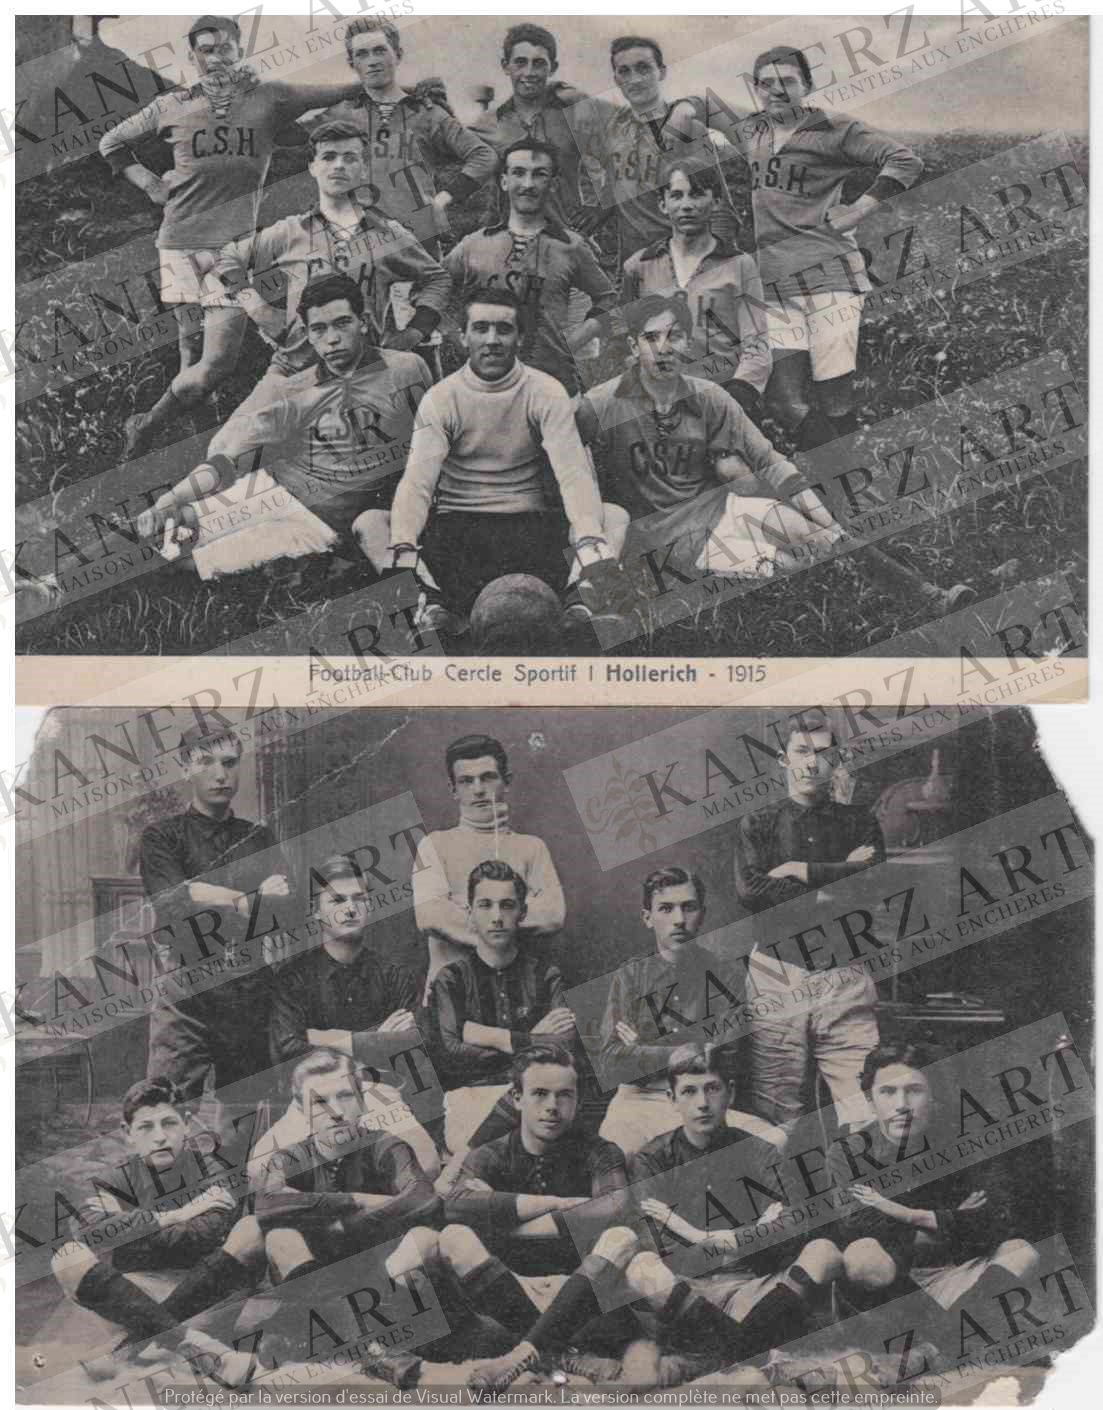 Null (SPORT/FOOTBALL) 1. 1915 postcard of the Football Club Cercle sportif de Ho&hellip;